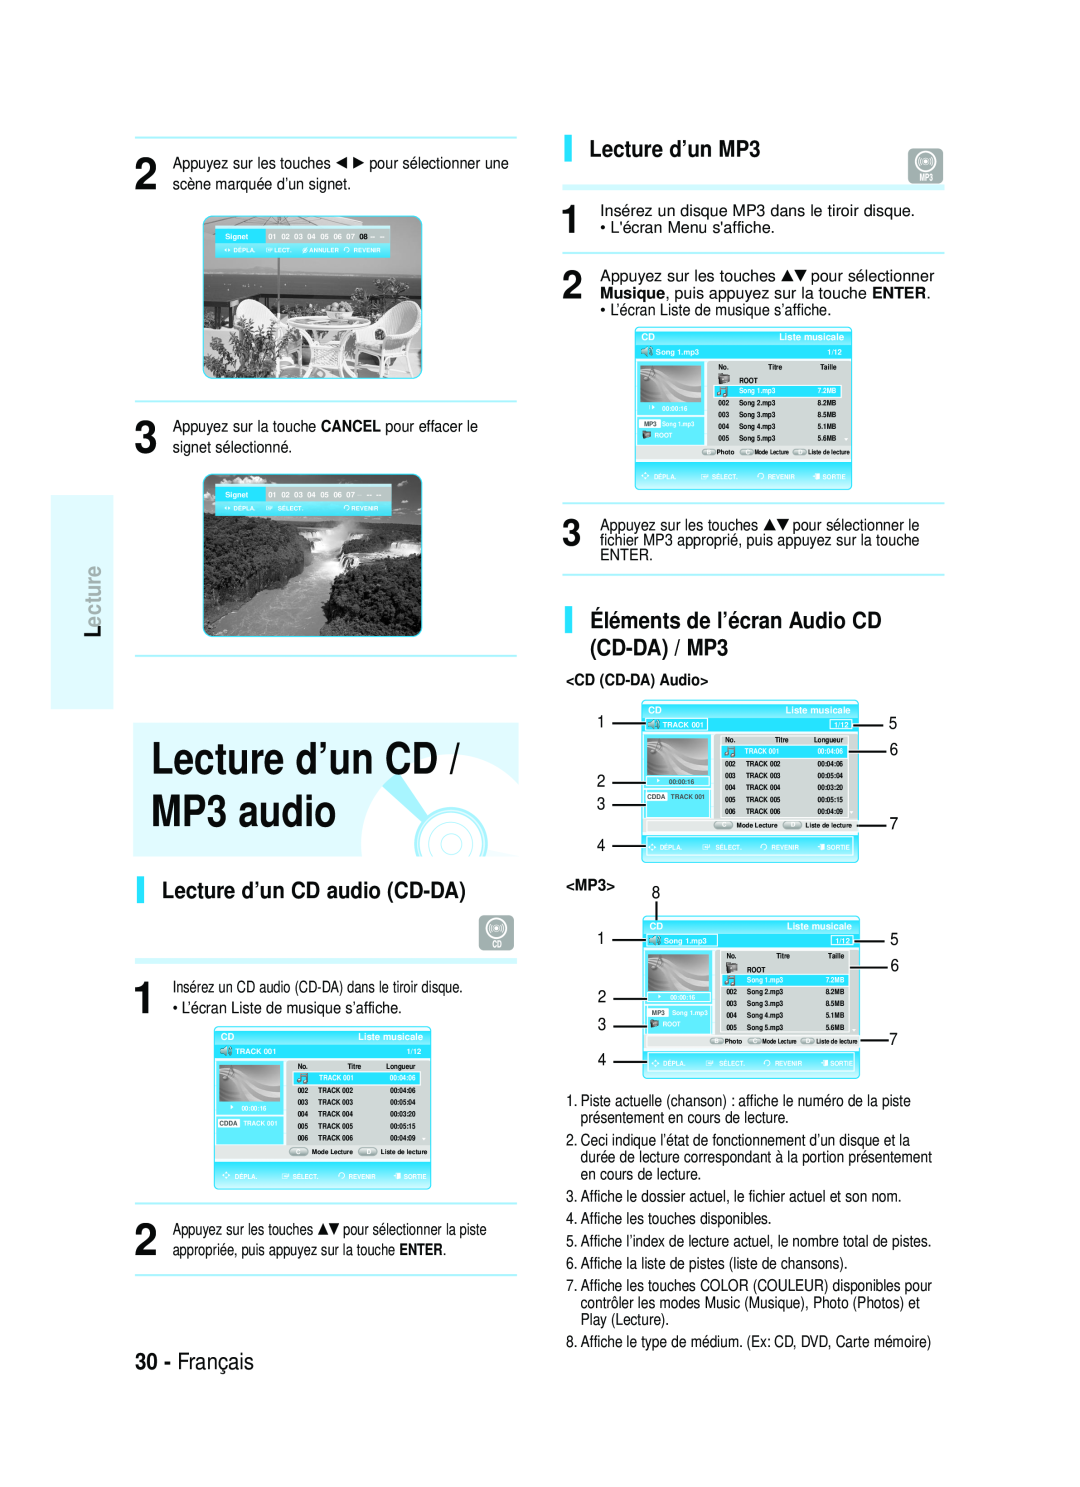 Samsung AK68-01357B Lecture d’un CD / MP3 audio, Lecture d’un CD audio CD-DA, Lecture d’un MP3, Français, CD CD-DA Audio 